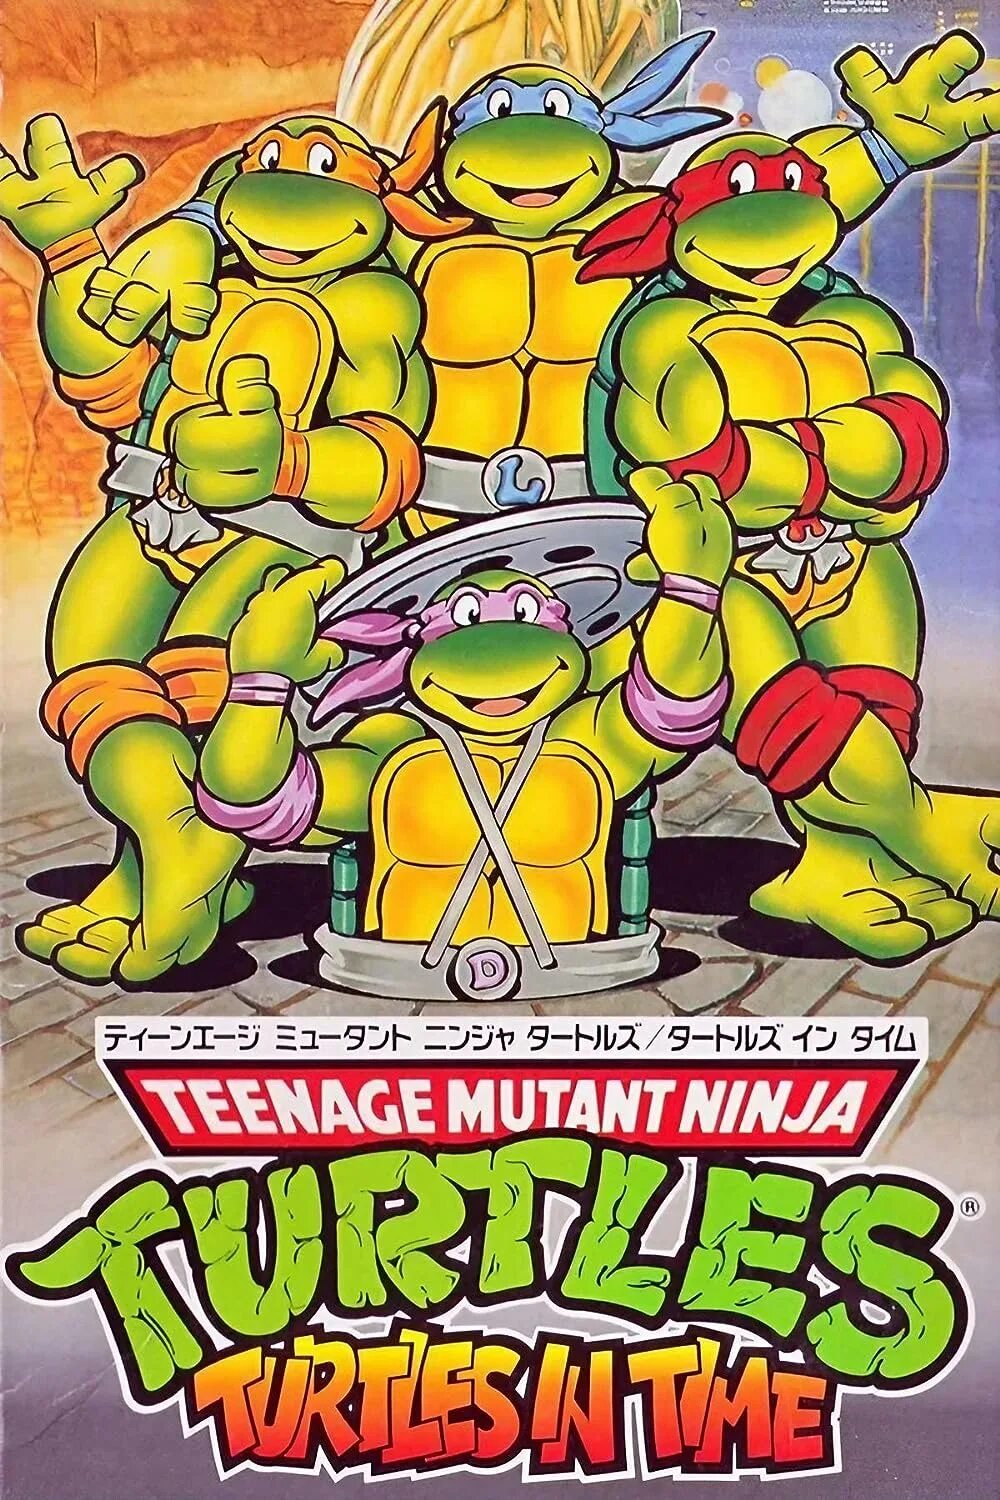 Turtles in time. Teenage Mutant Ninja Turtles 4 Turtles in time. Обложка ниндзя Туртлес супер Нинтендо. Teenage Mutant Ninja Turtles IV Turtles in time Snes. Обложка для teenage Mutant Ninja Turtles IV - Turtles in time Нинтендо.